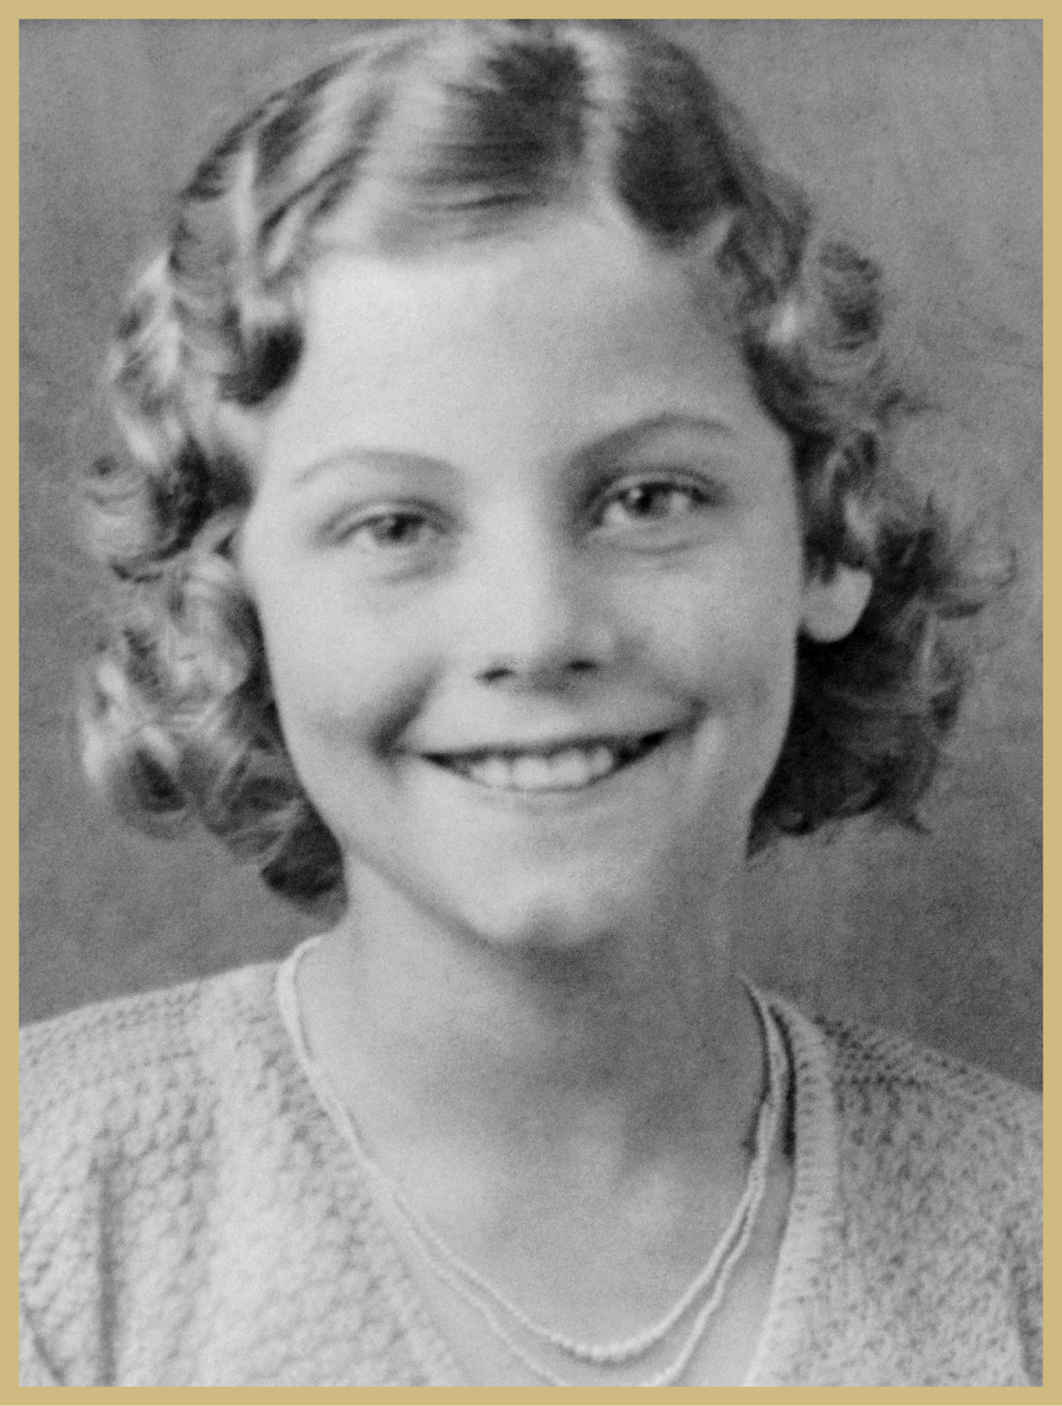 Ava at age 12 Brogden North Carolina Getty ImagesJohn Springer Collection - photo 5